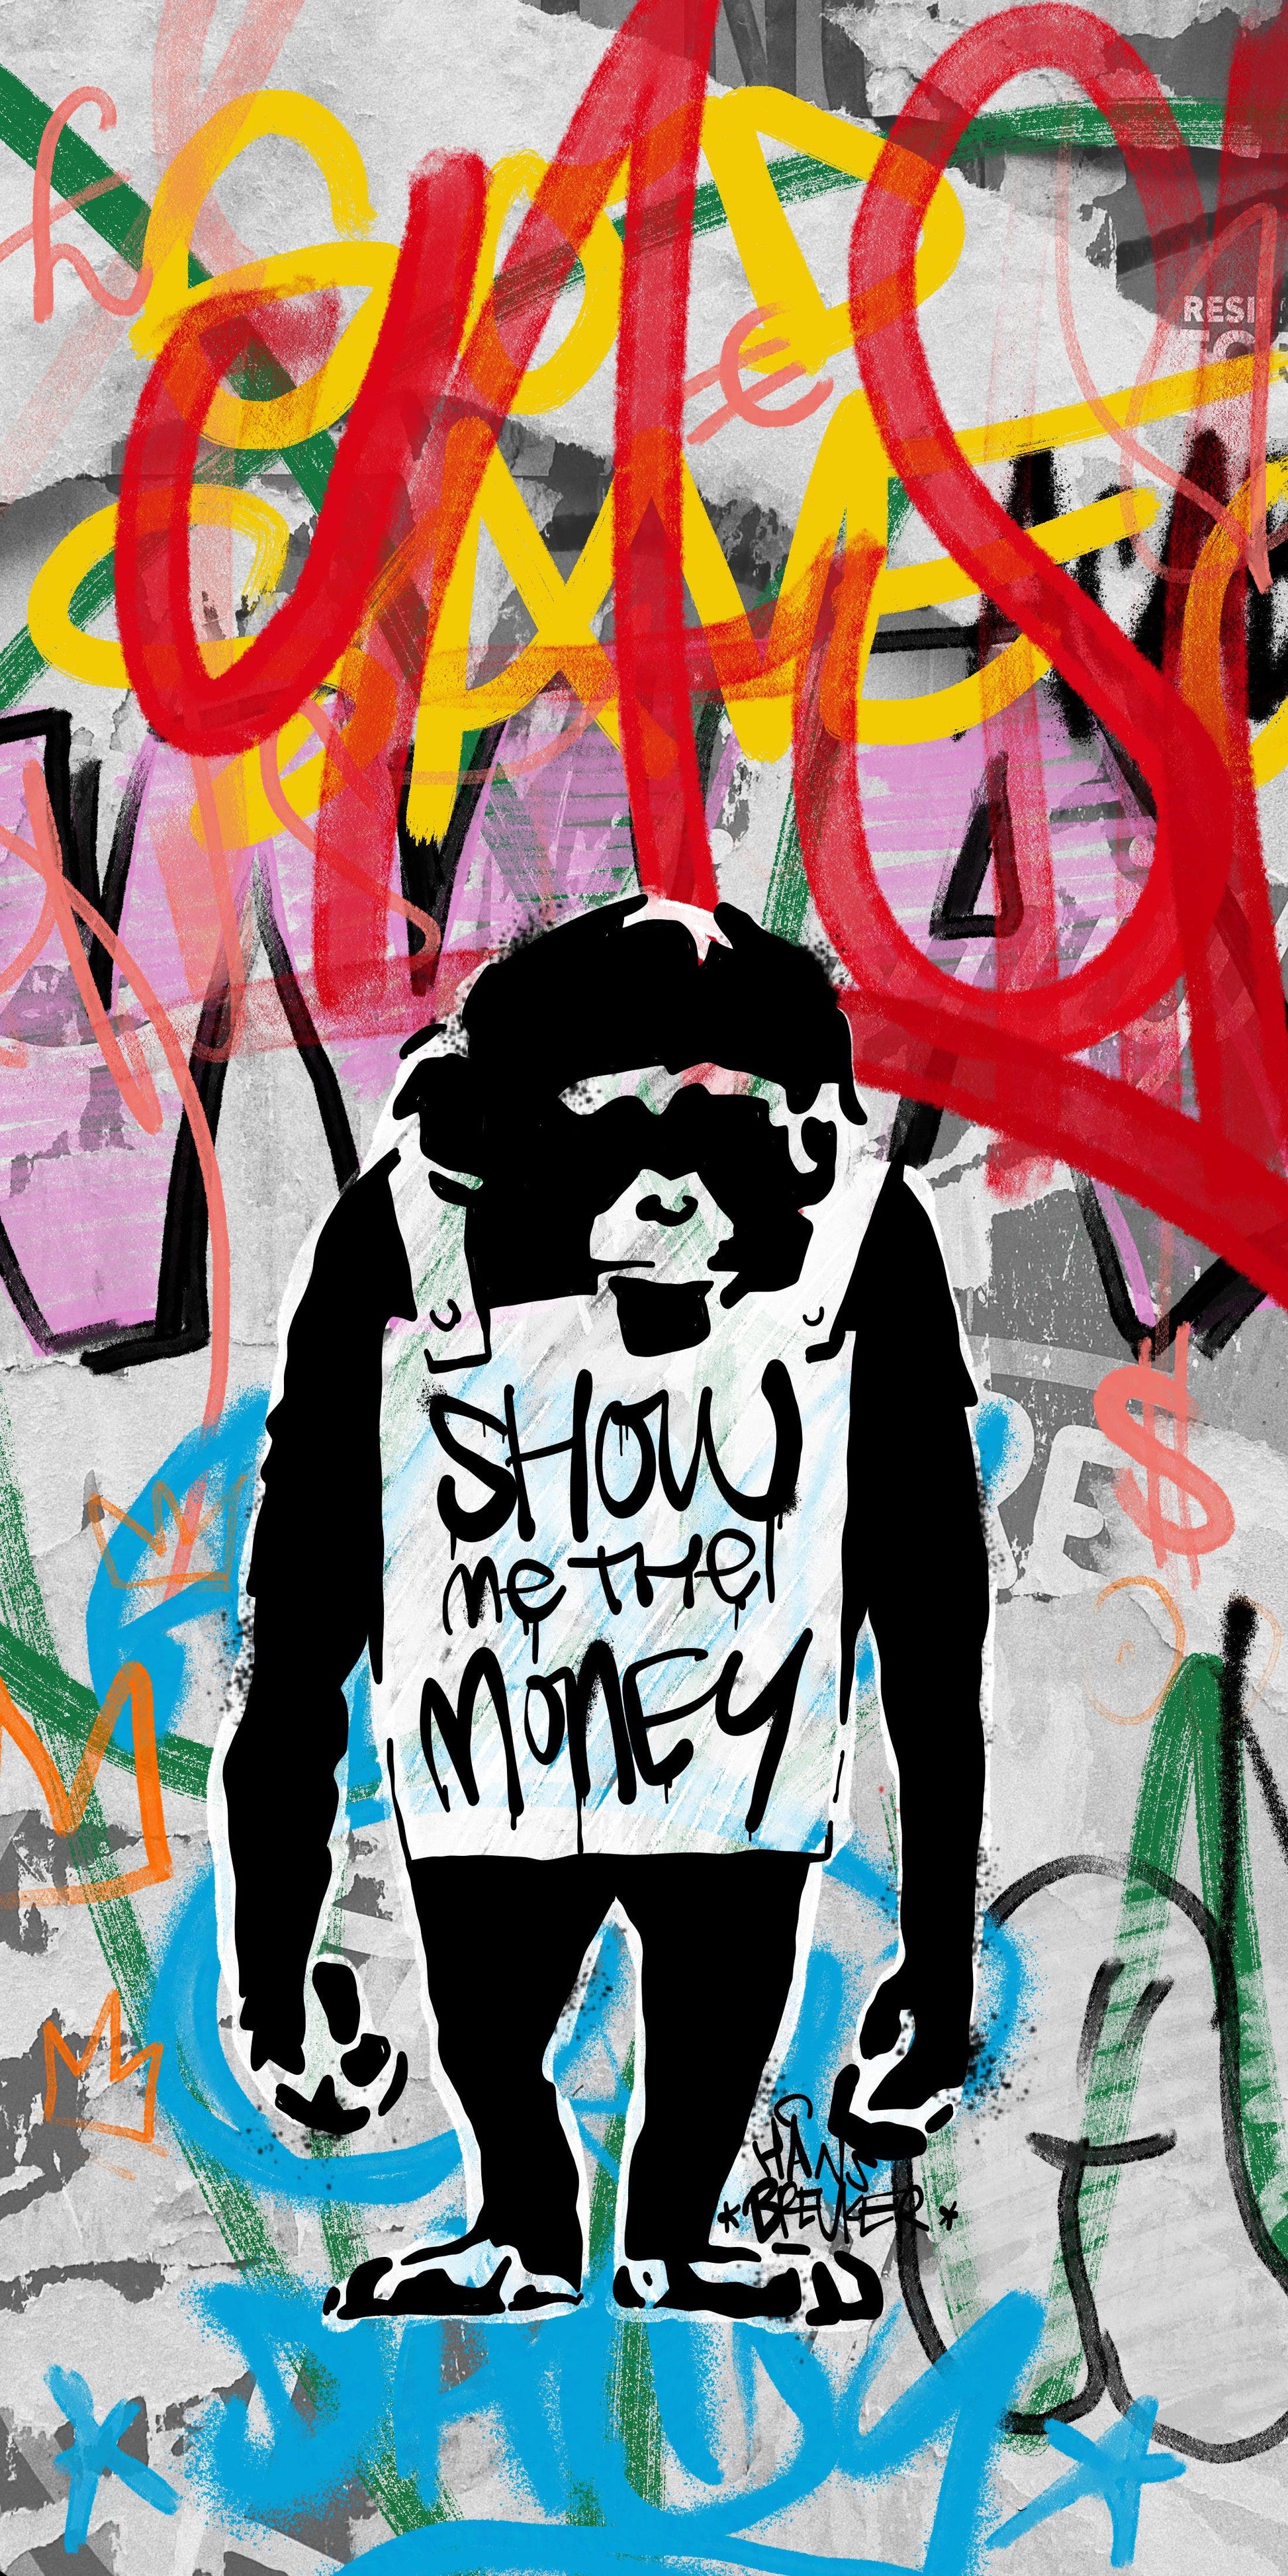 Show me the money ape - Hans Breuker